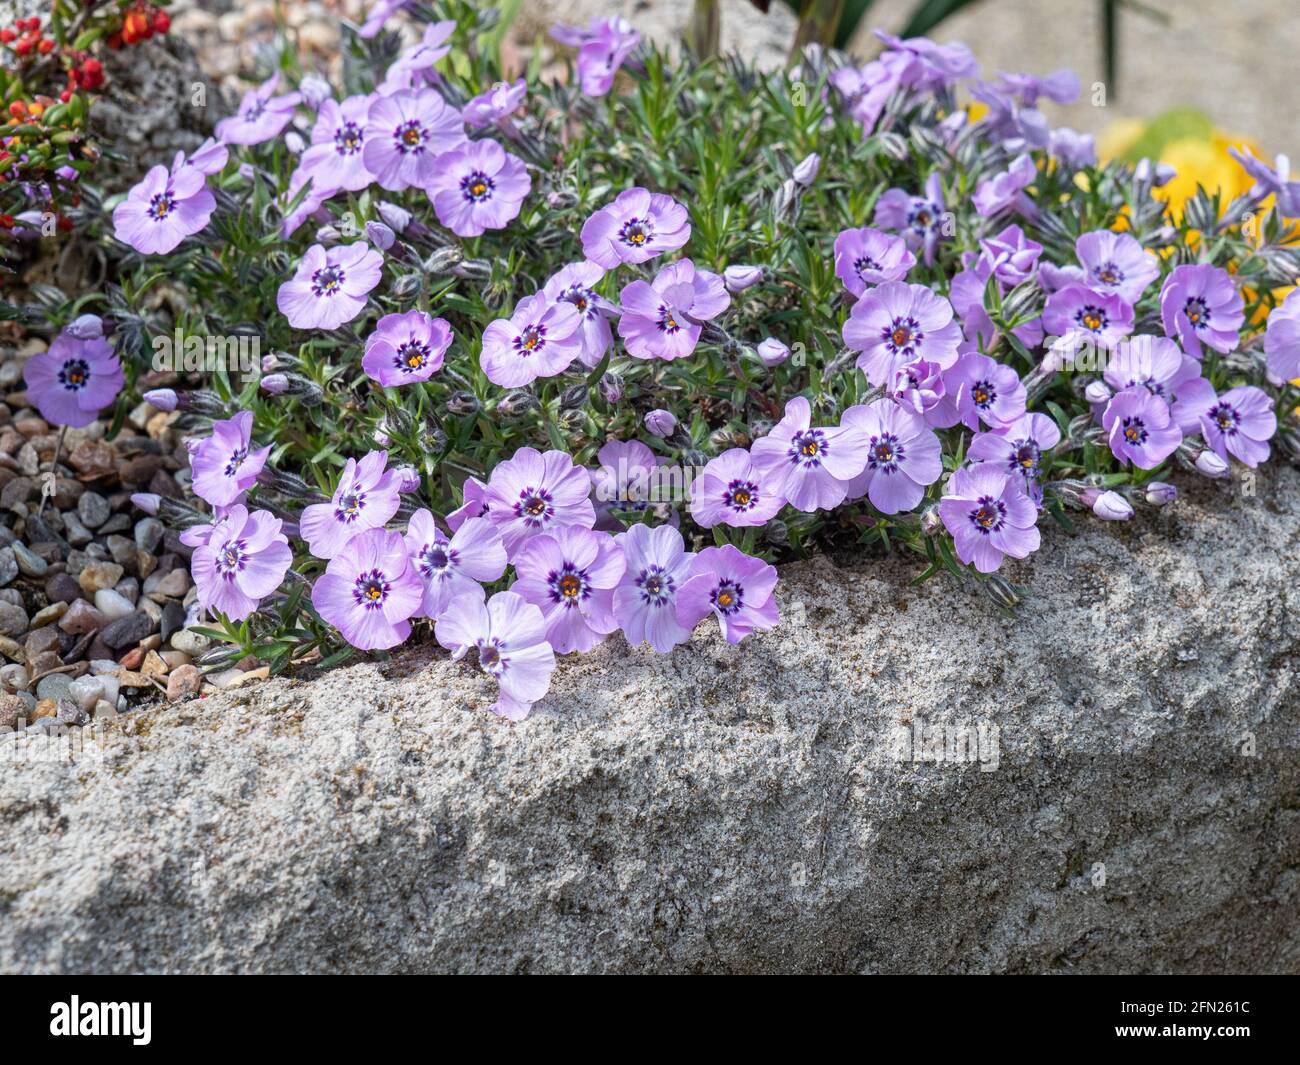 The alpine phlox Phlox douglasii Boothman's Variety flowering on the dge of a sink garden Stock Photo